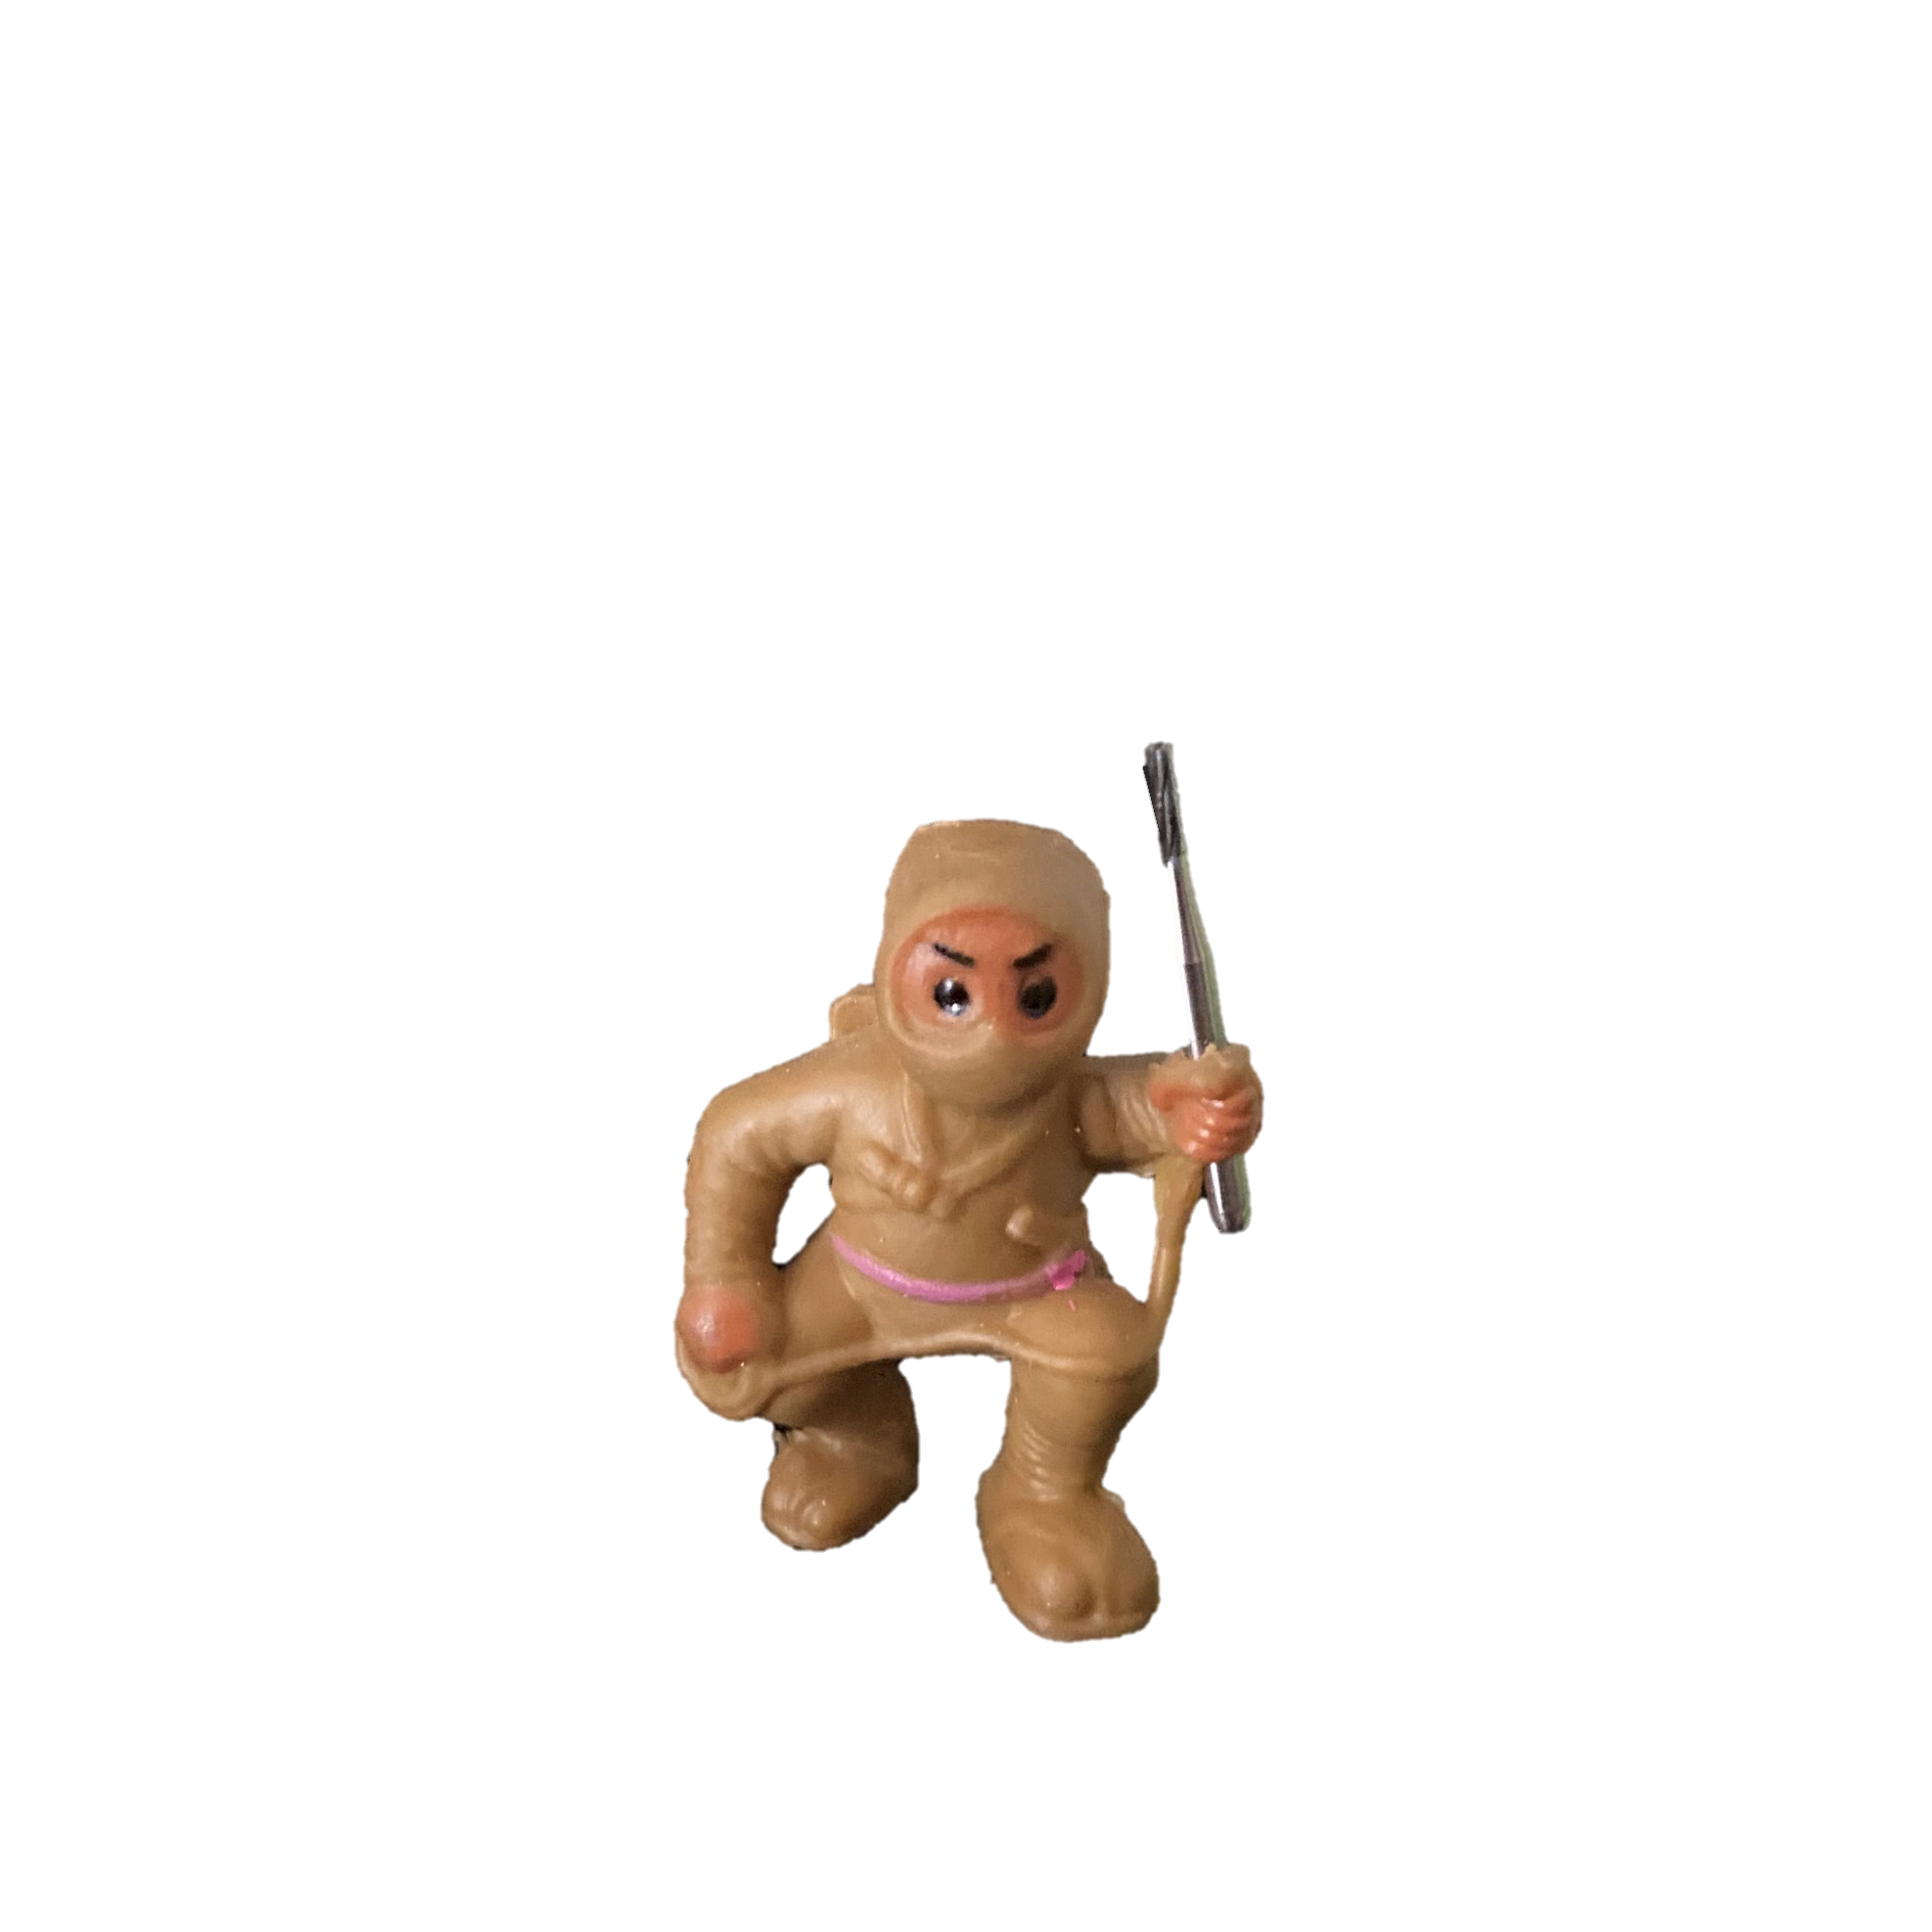 little toy ninja holding a dental bur